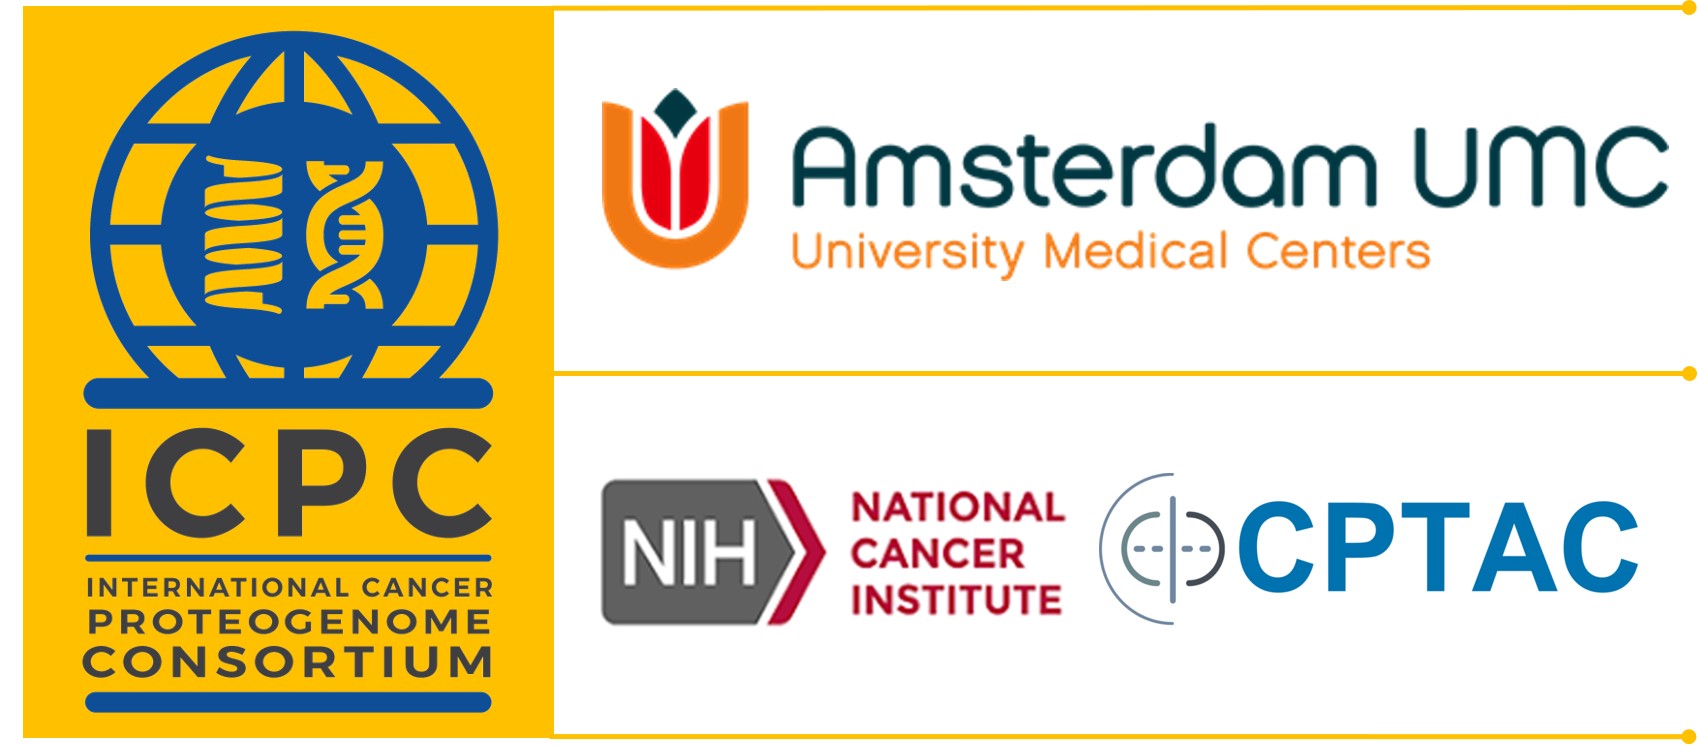 International Cancer Proteogenome Consortium and Amsterdam UMC logos